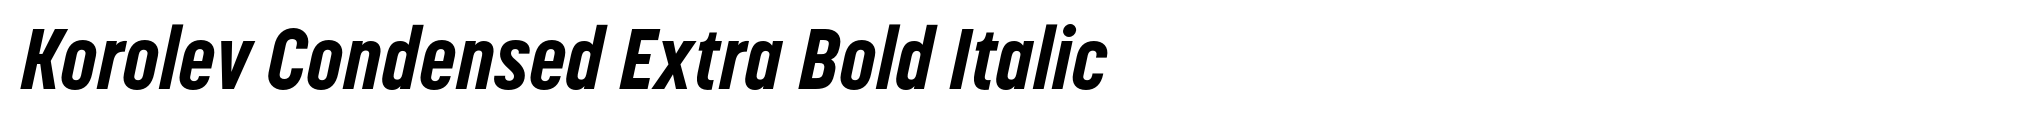 Korolev Condensed Extra Bold Italic image